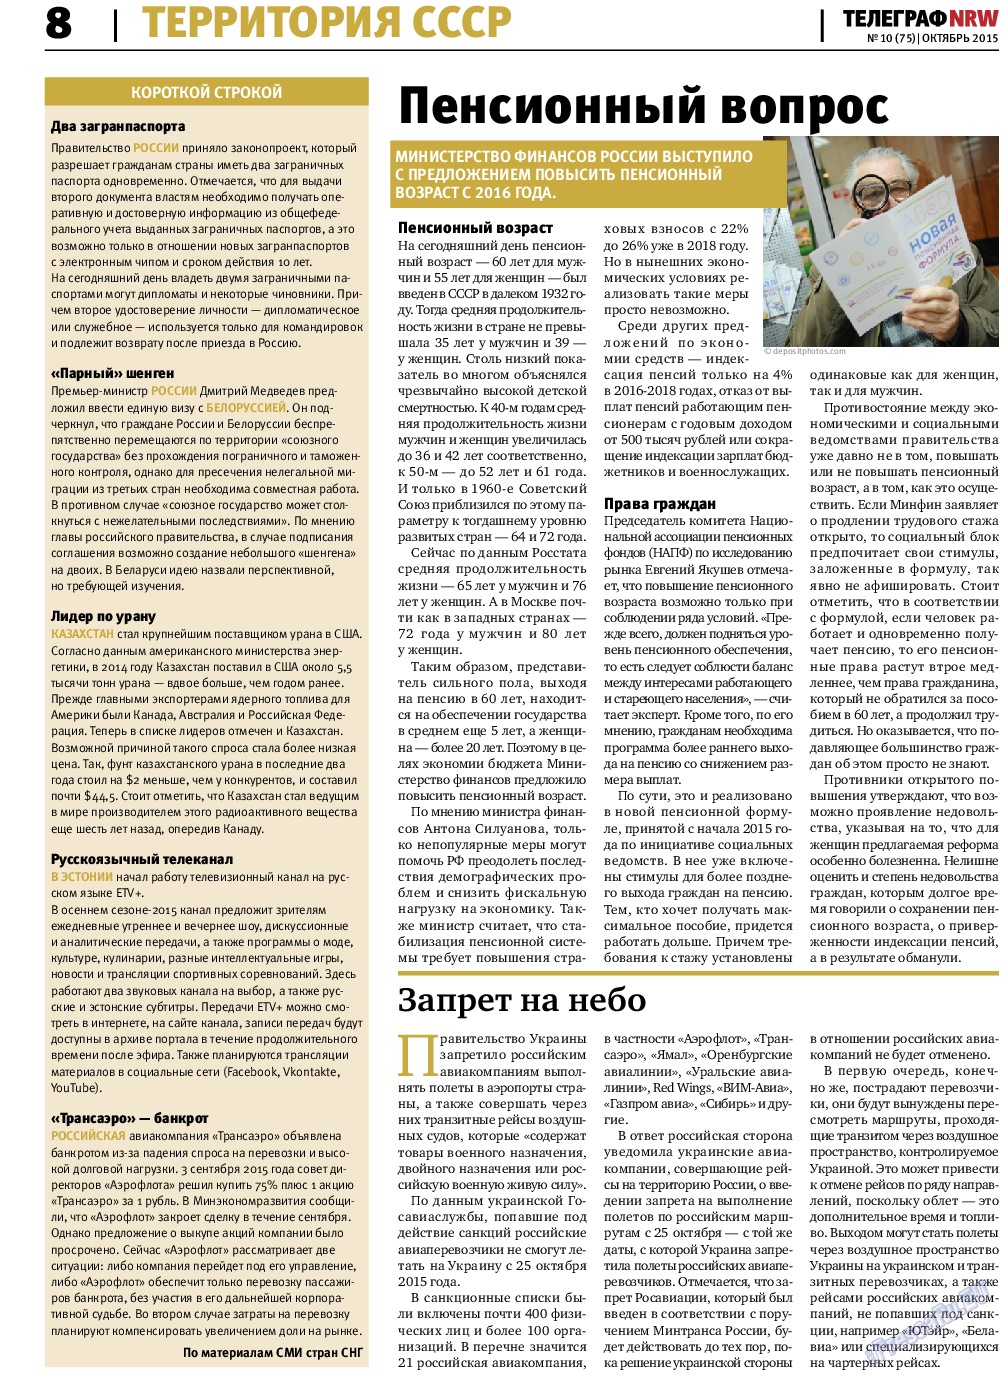 Телеграф NRW, газета. 2015 №10 стр.8